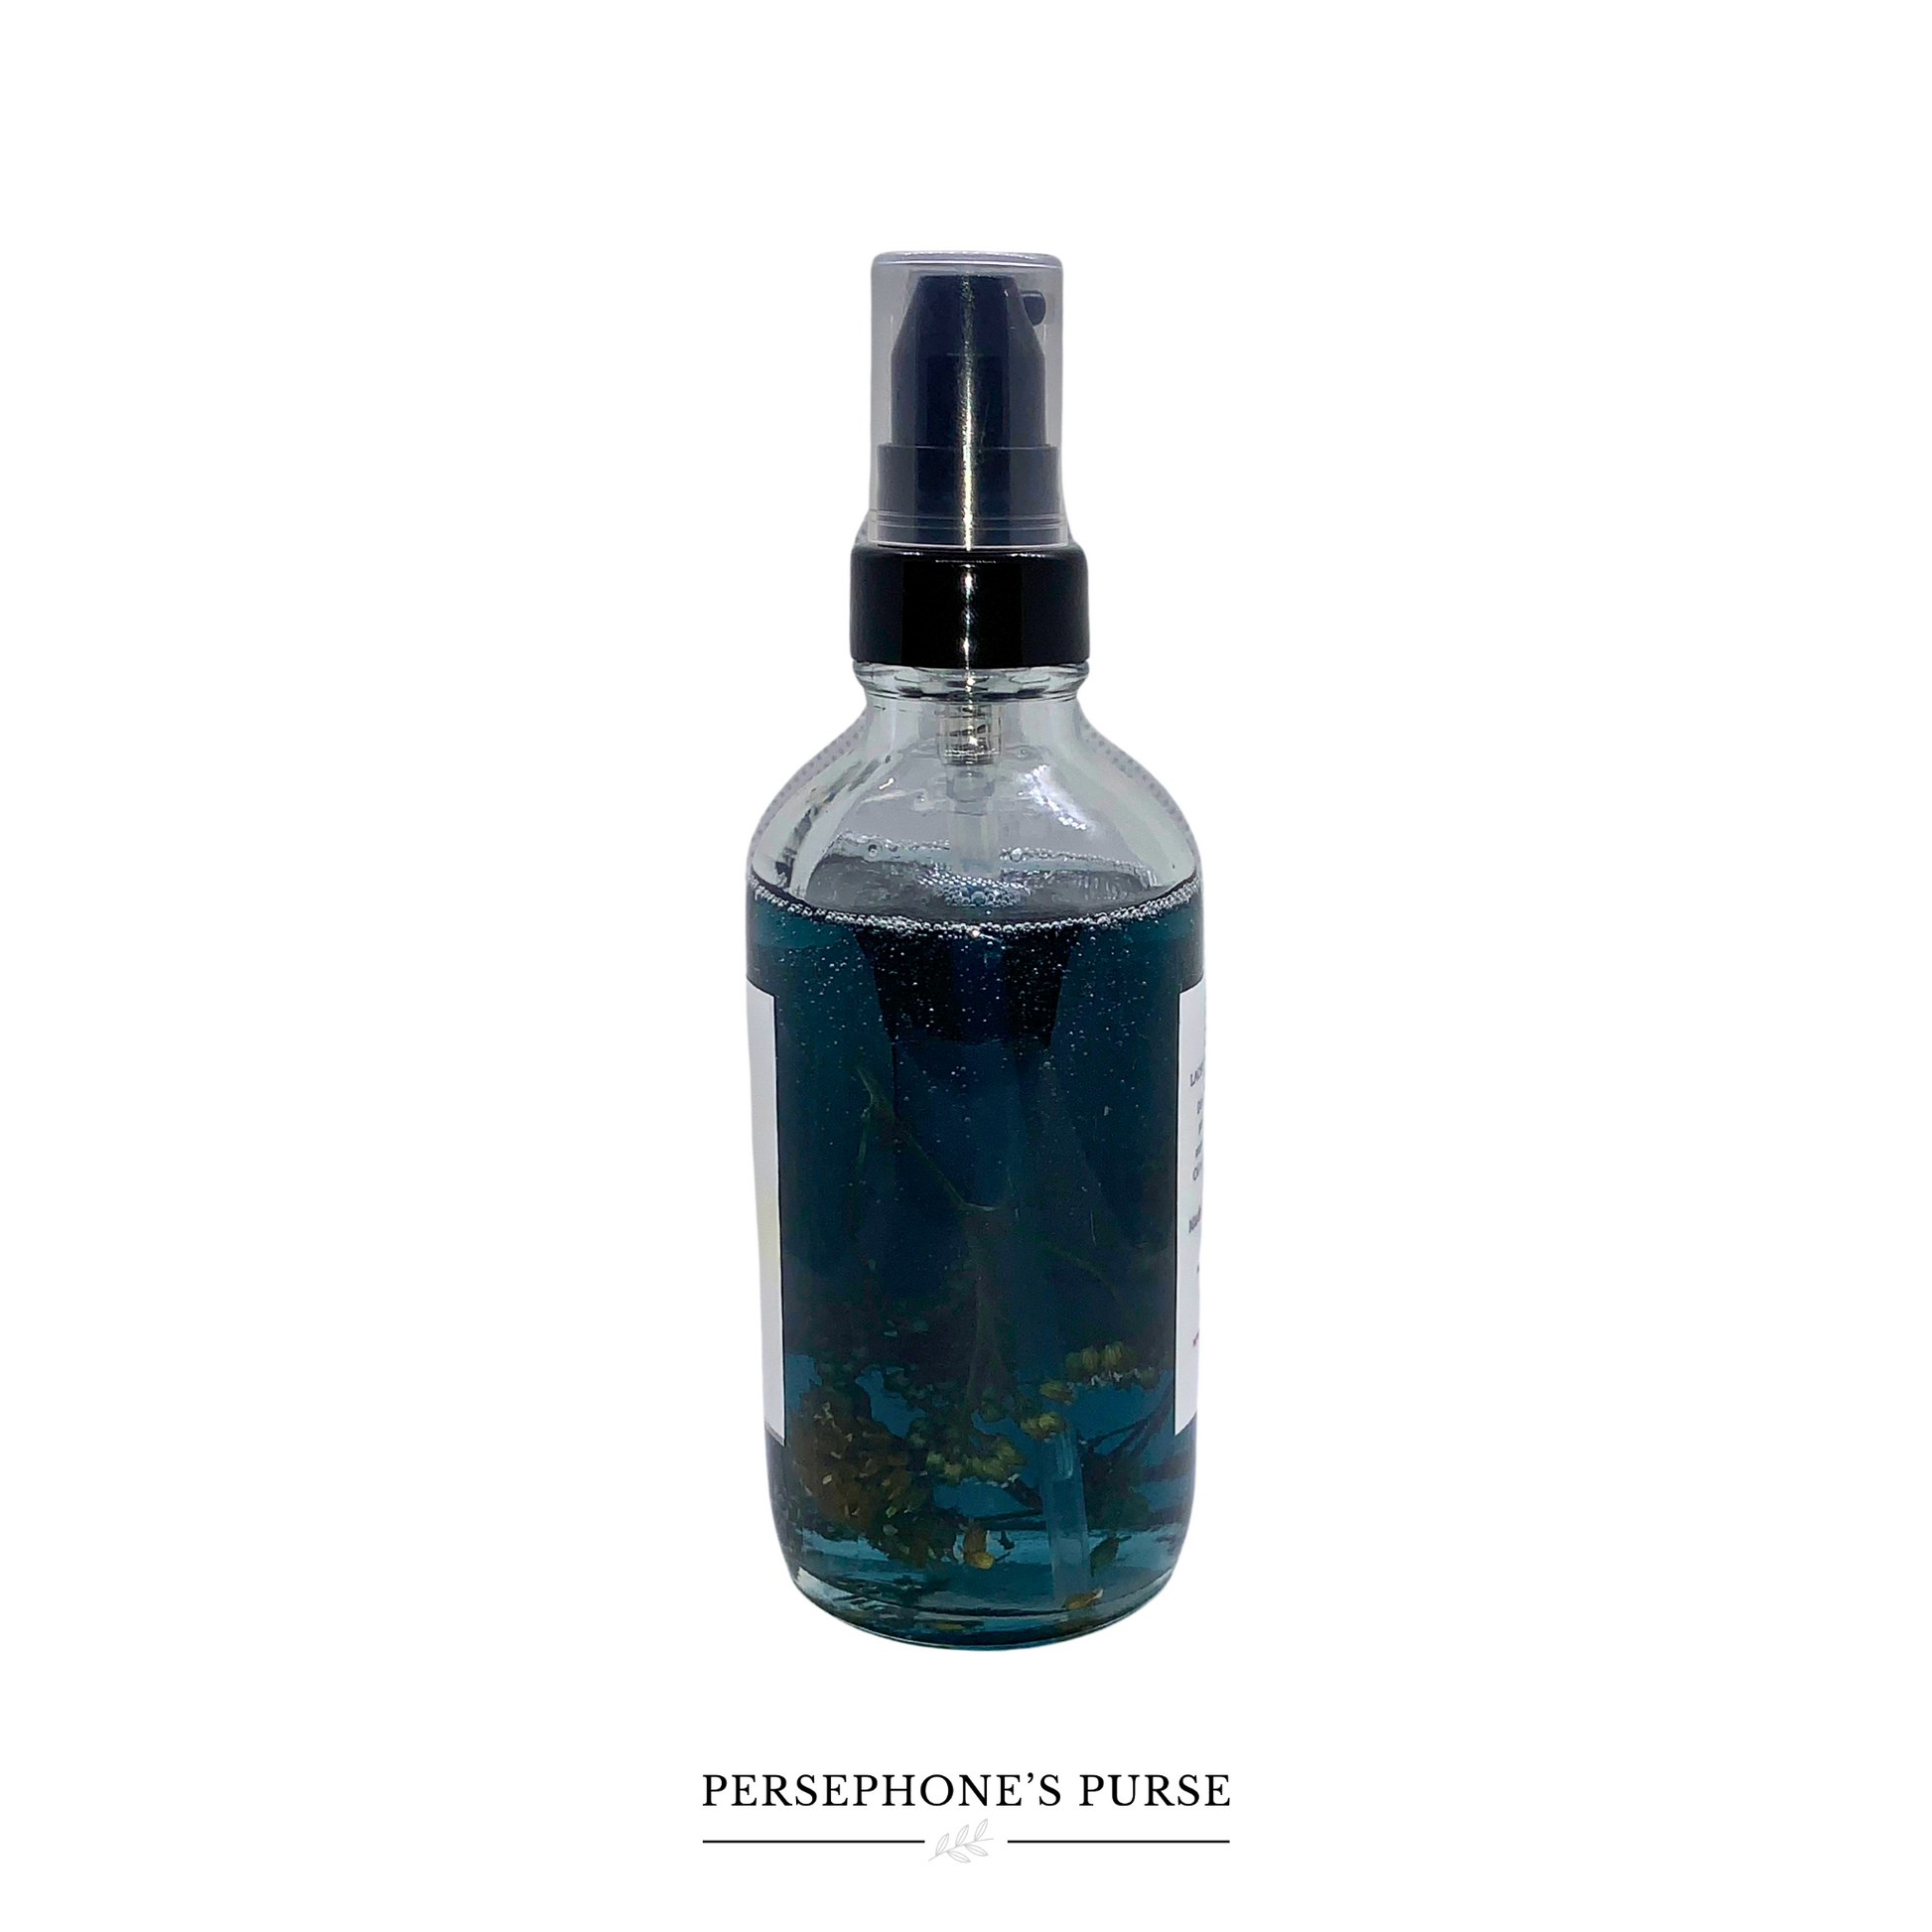 3 Fates Sensuous Body Oil - Persephone's Purse